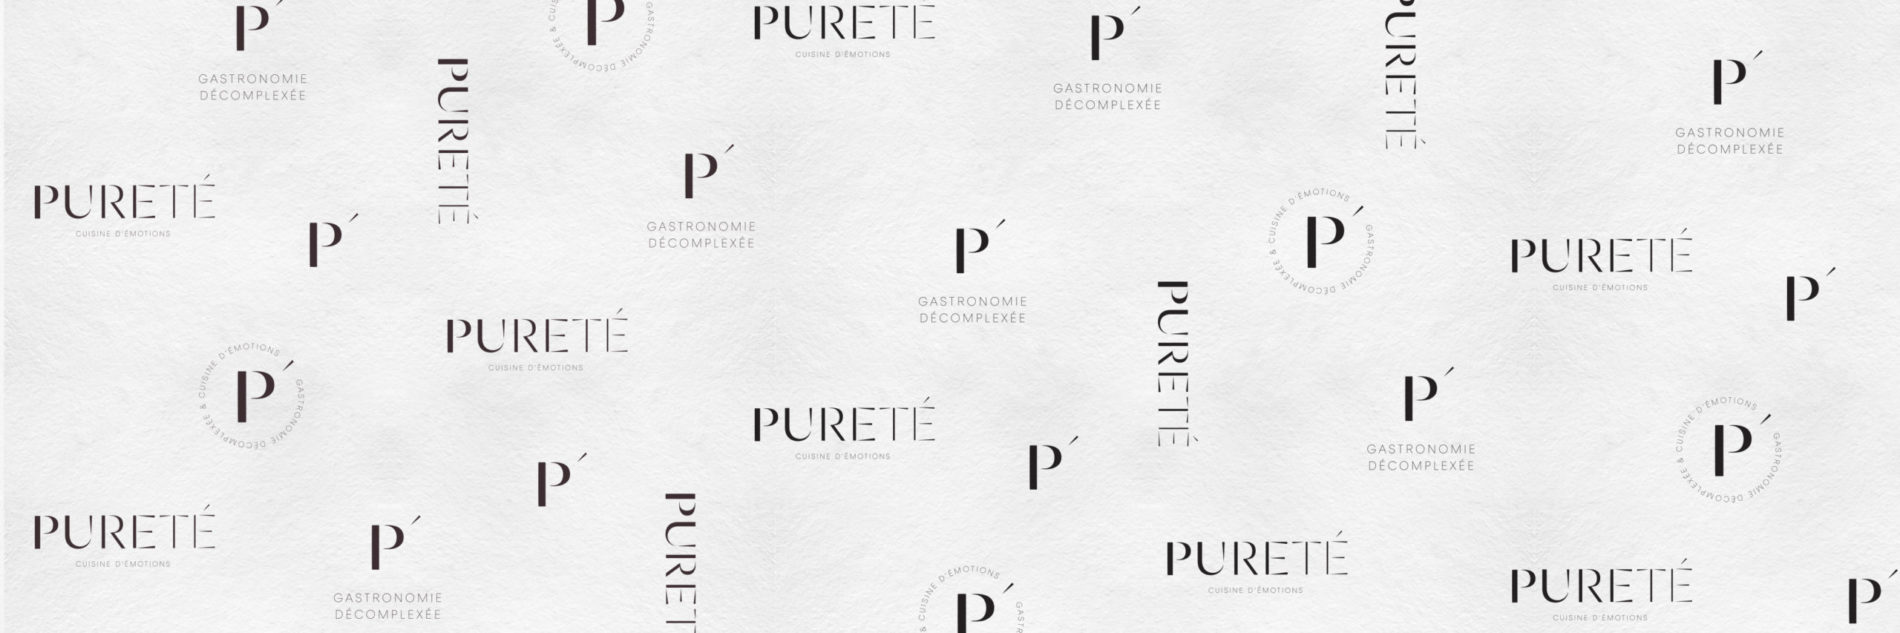 Motif-pureté-creation graphique identite visuelle-logo